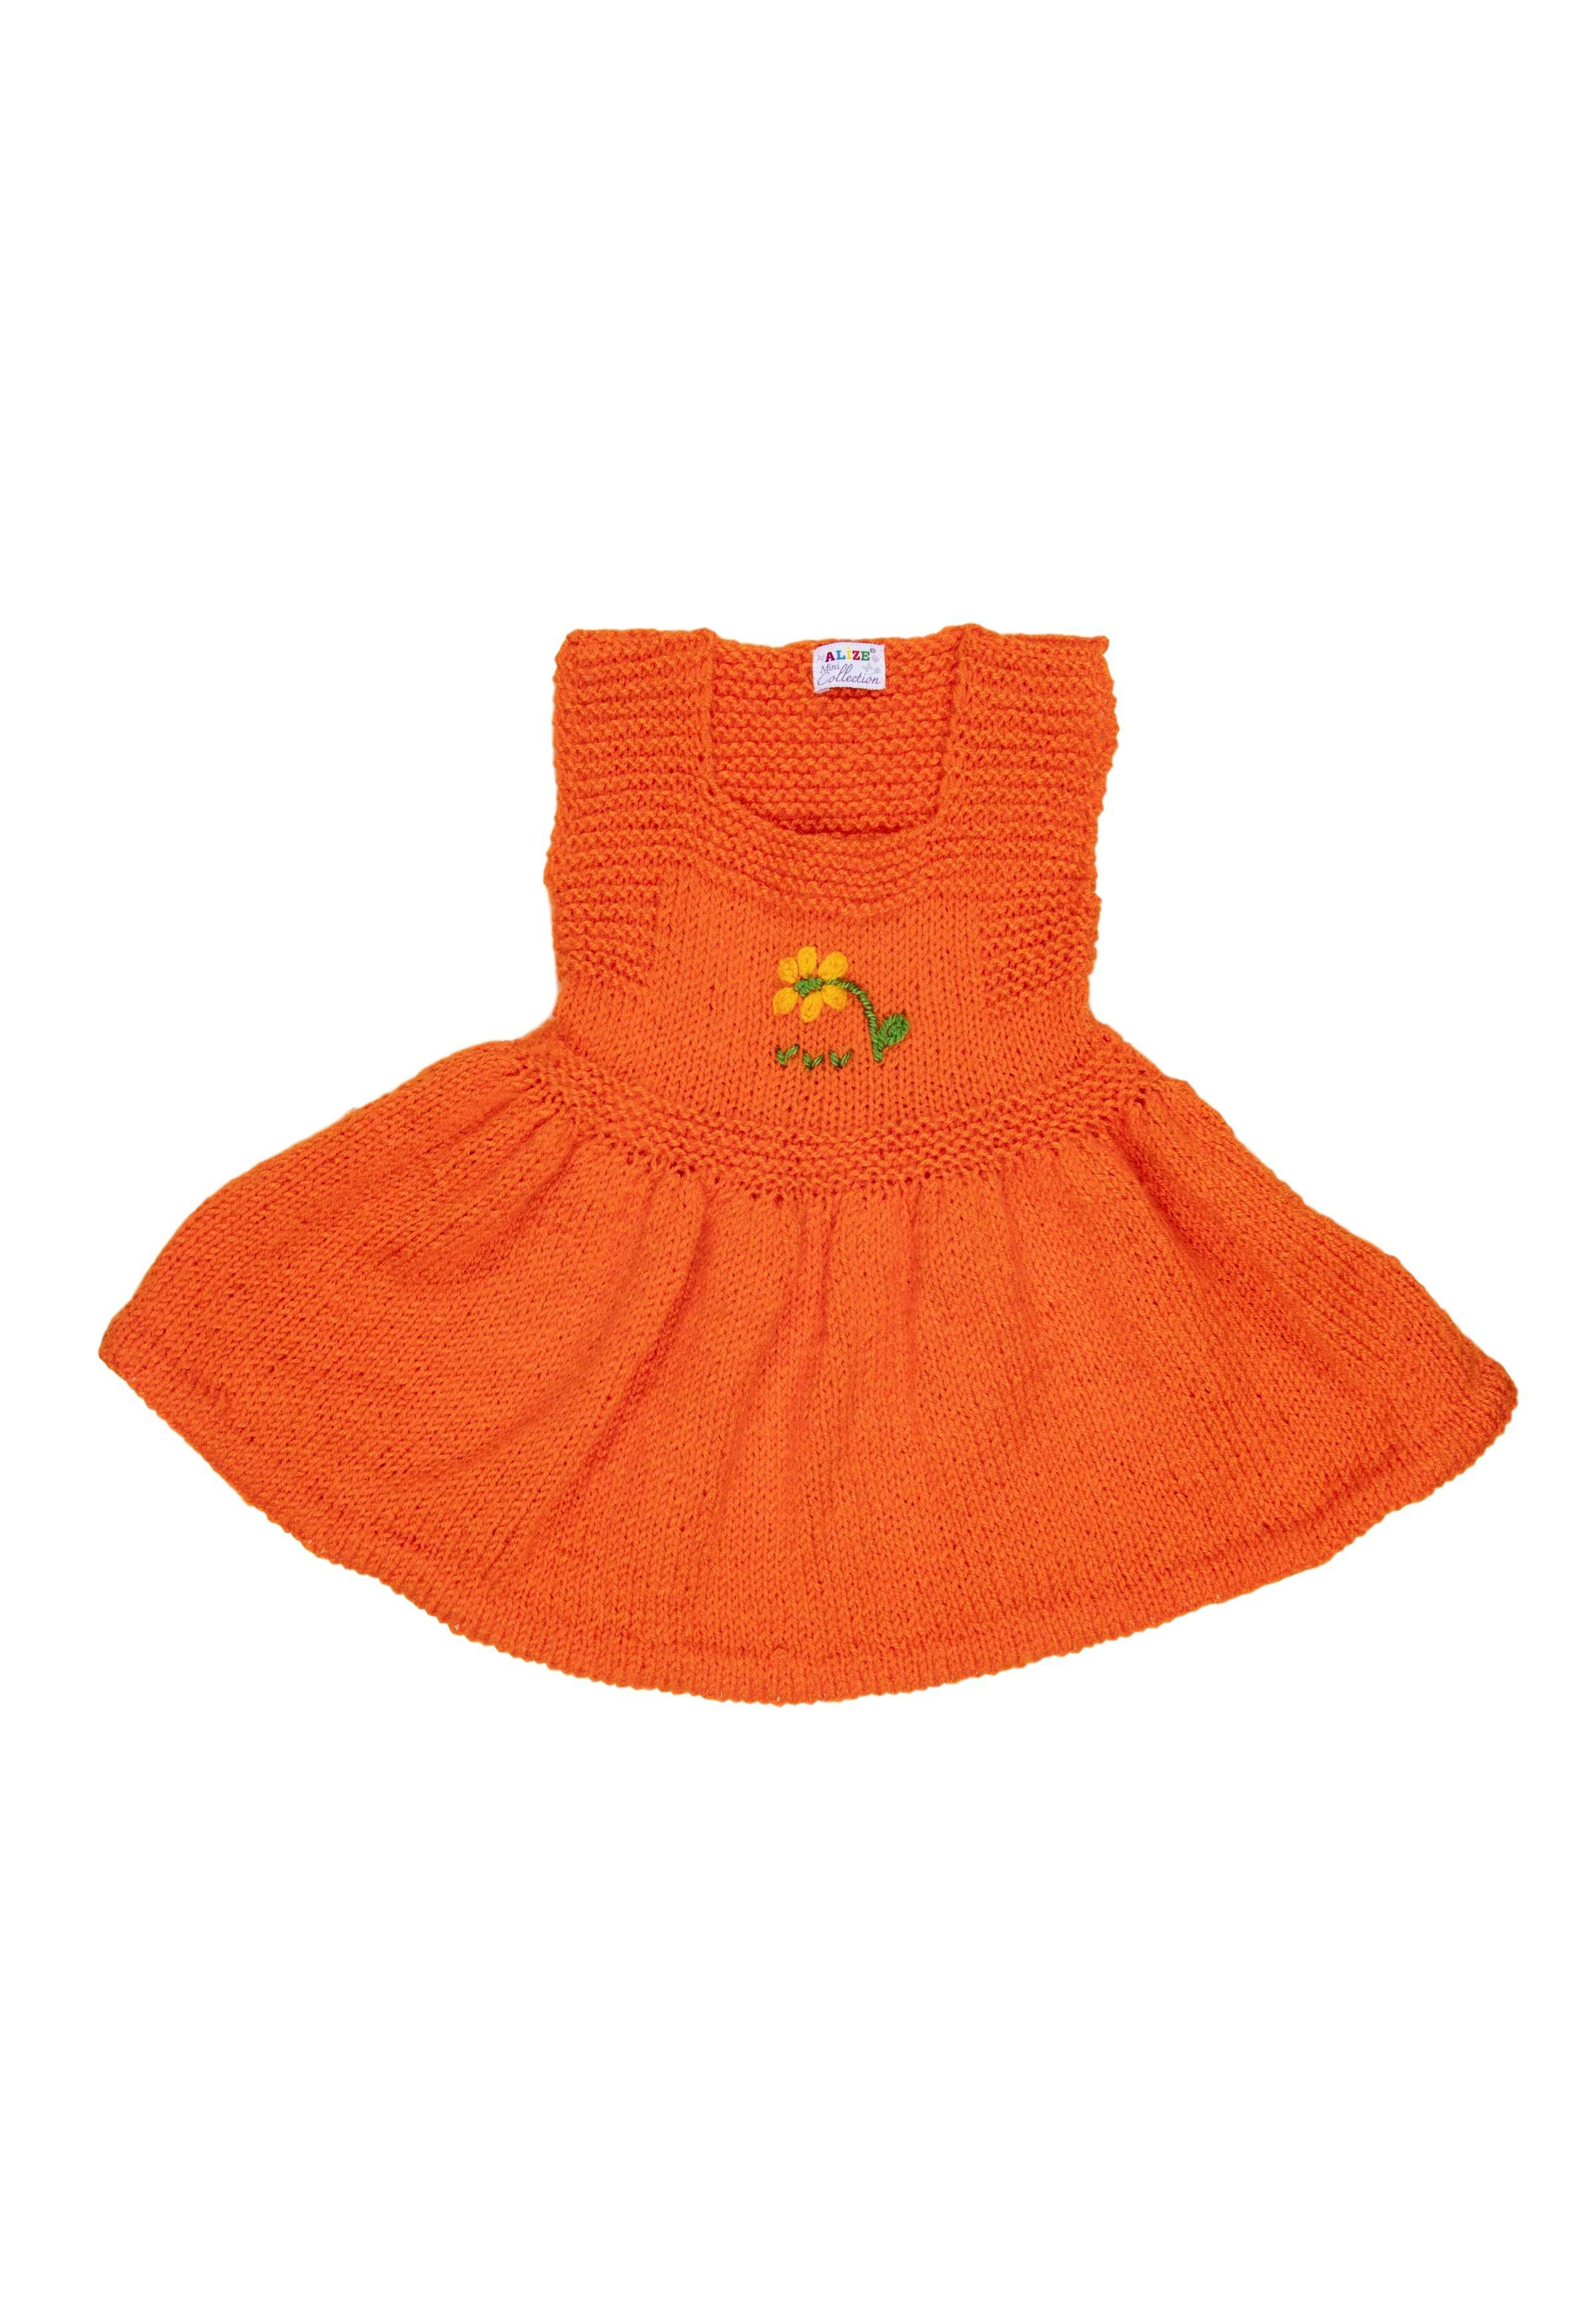 Vestido tejido a mano anaranjado - Alize